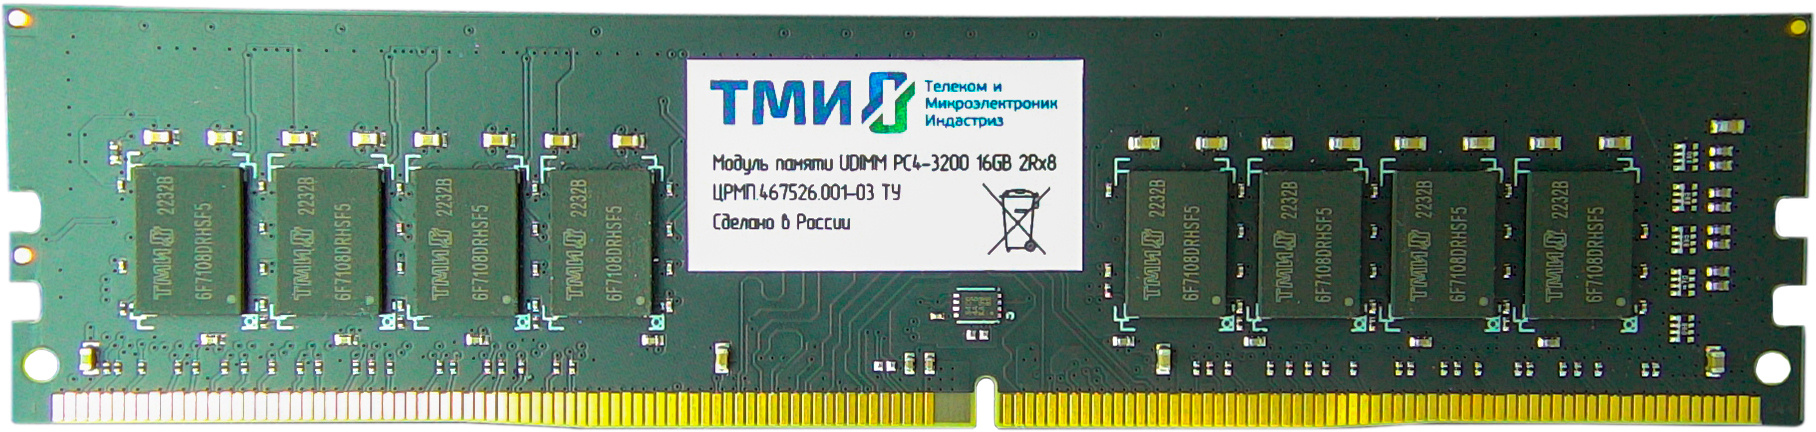    .467526.001-03 DDR4 -  1x 16 3200, UDIMM,  OEM